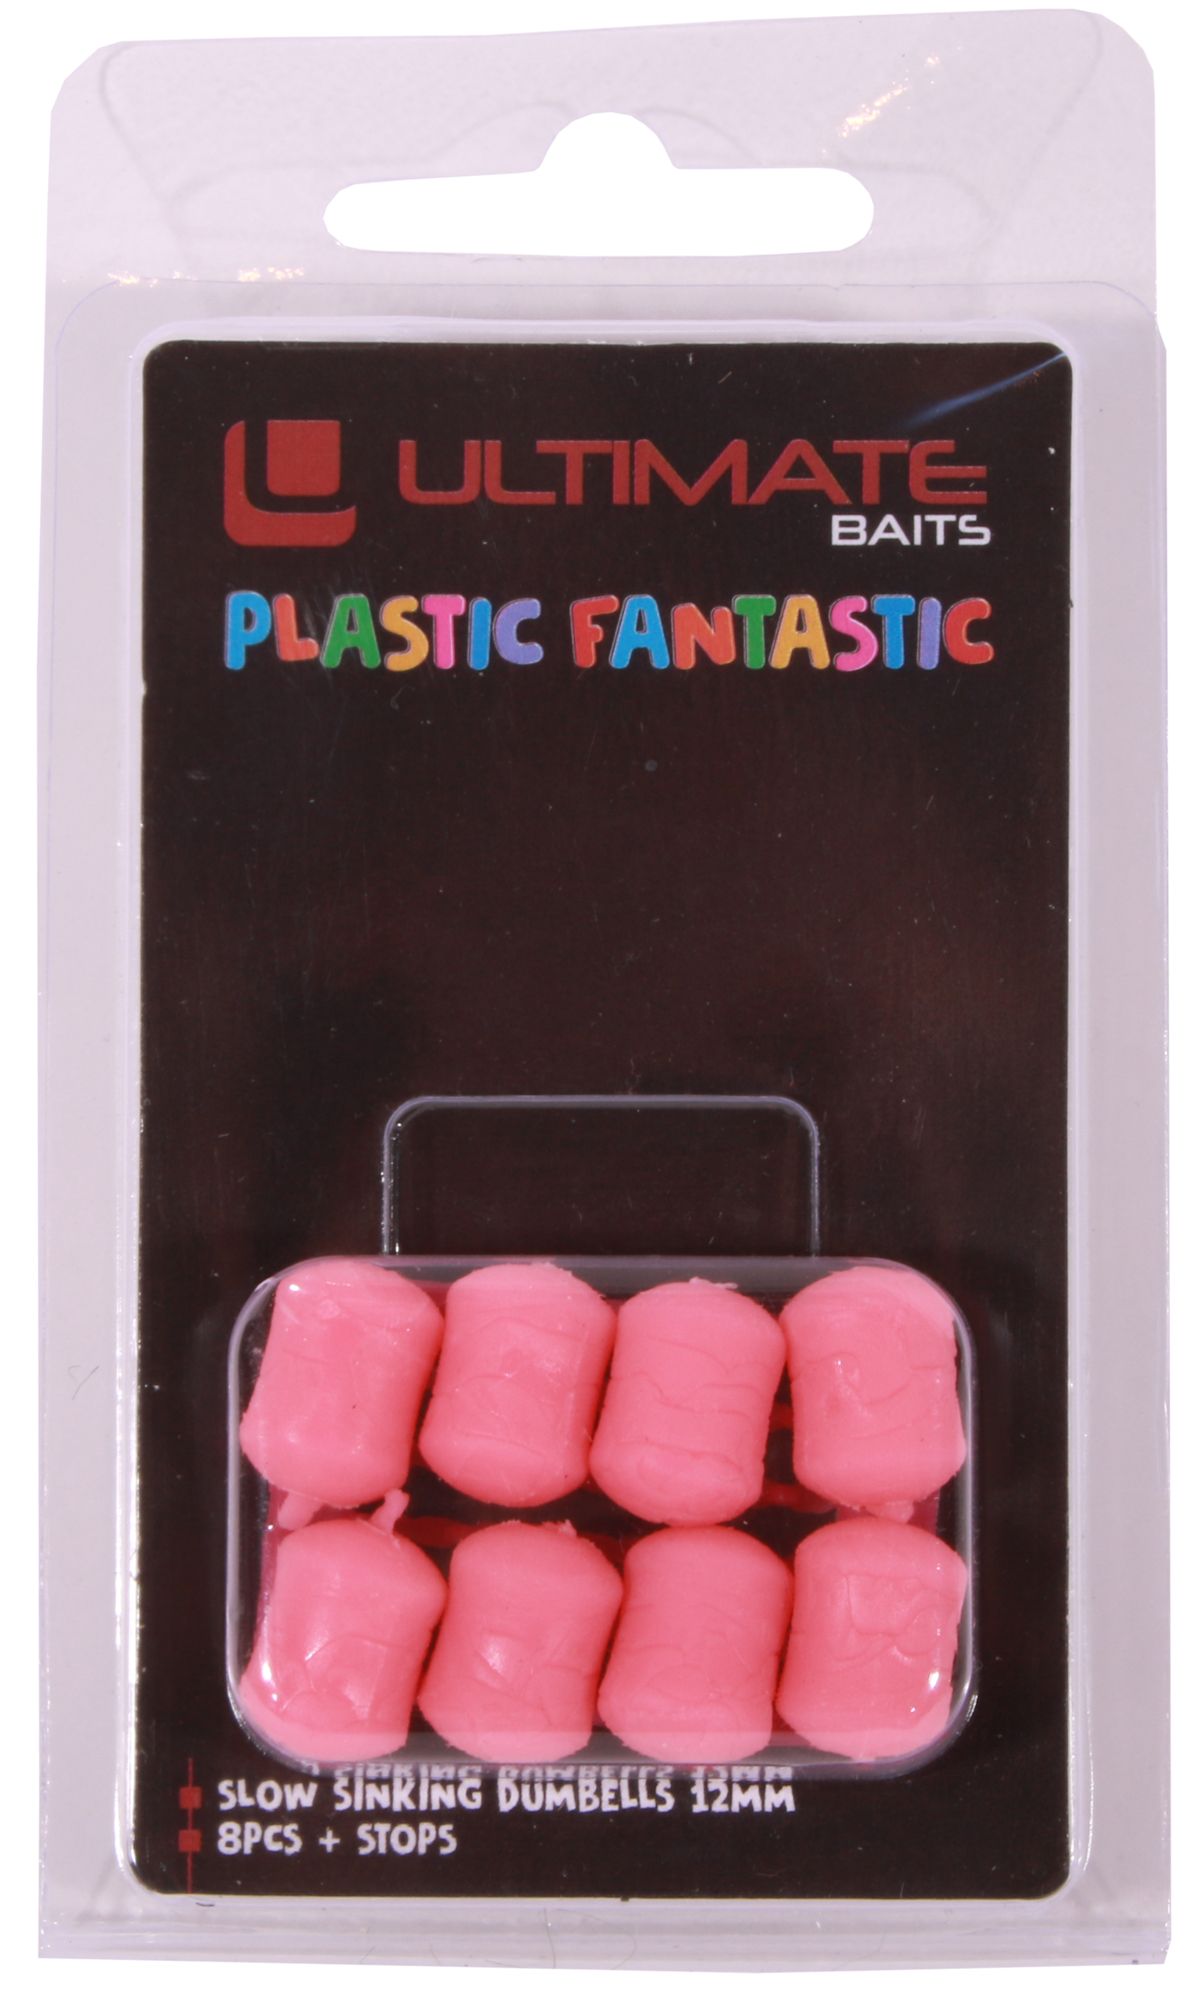 Ultimate Plastic Fantastic Dumbels 12mm